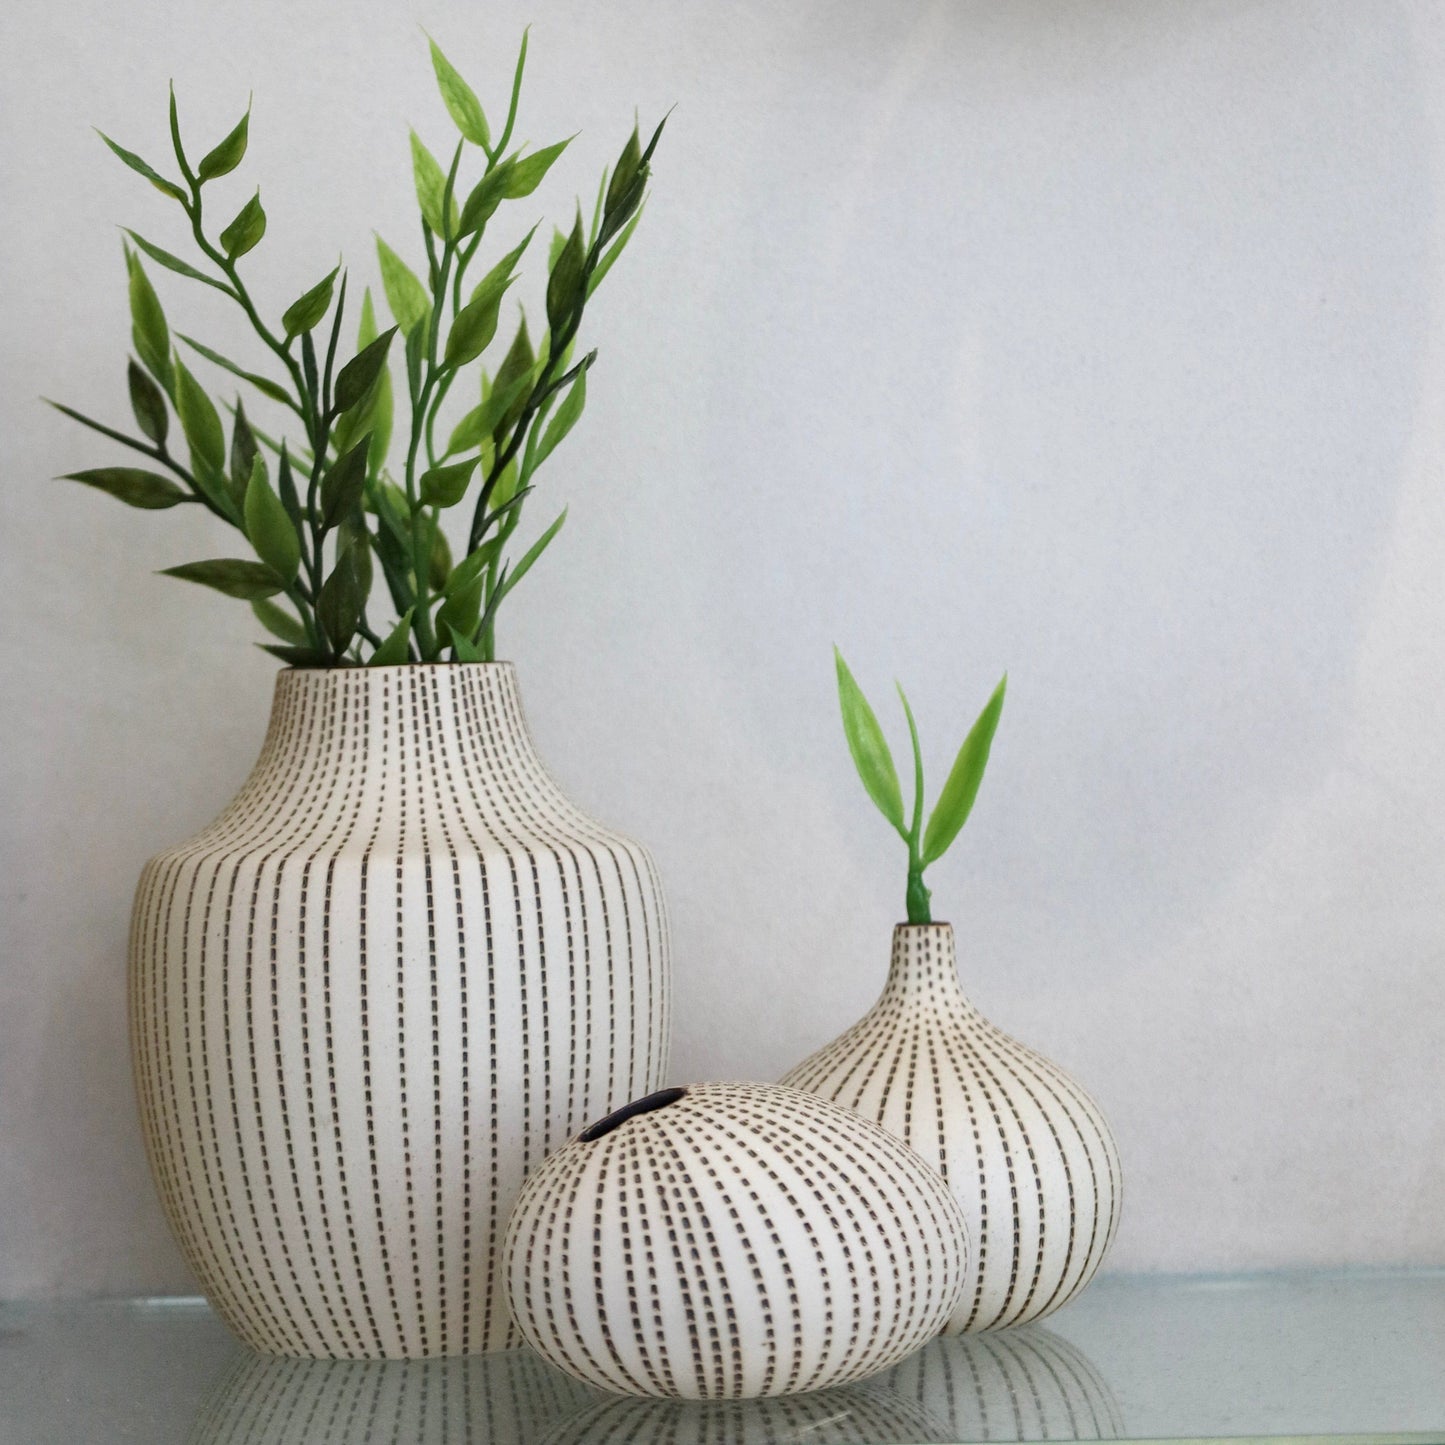 GIFT Tiny Congo Porcelain Bud Vase - White with Dark Dash Lines